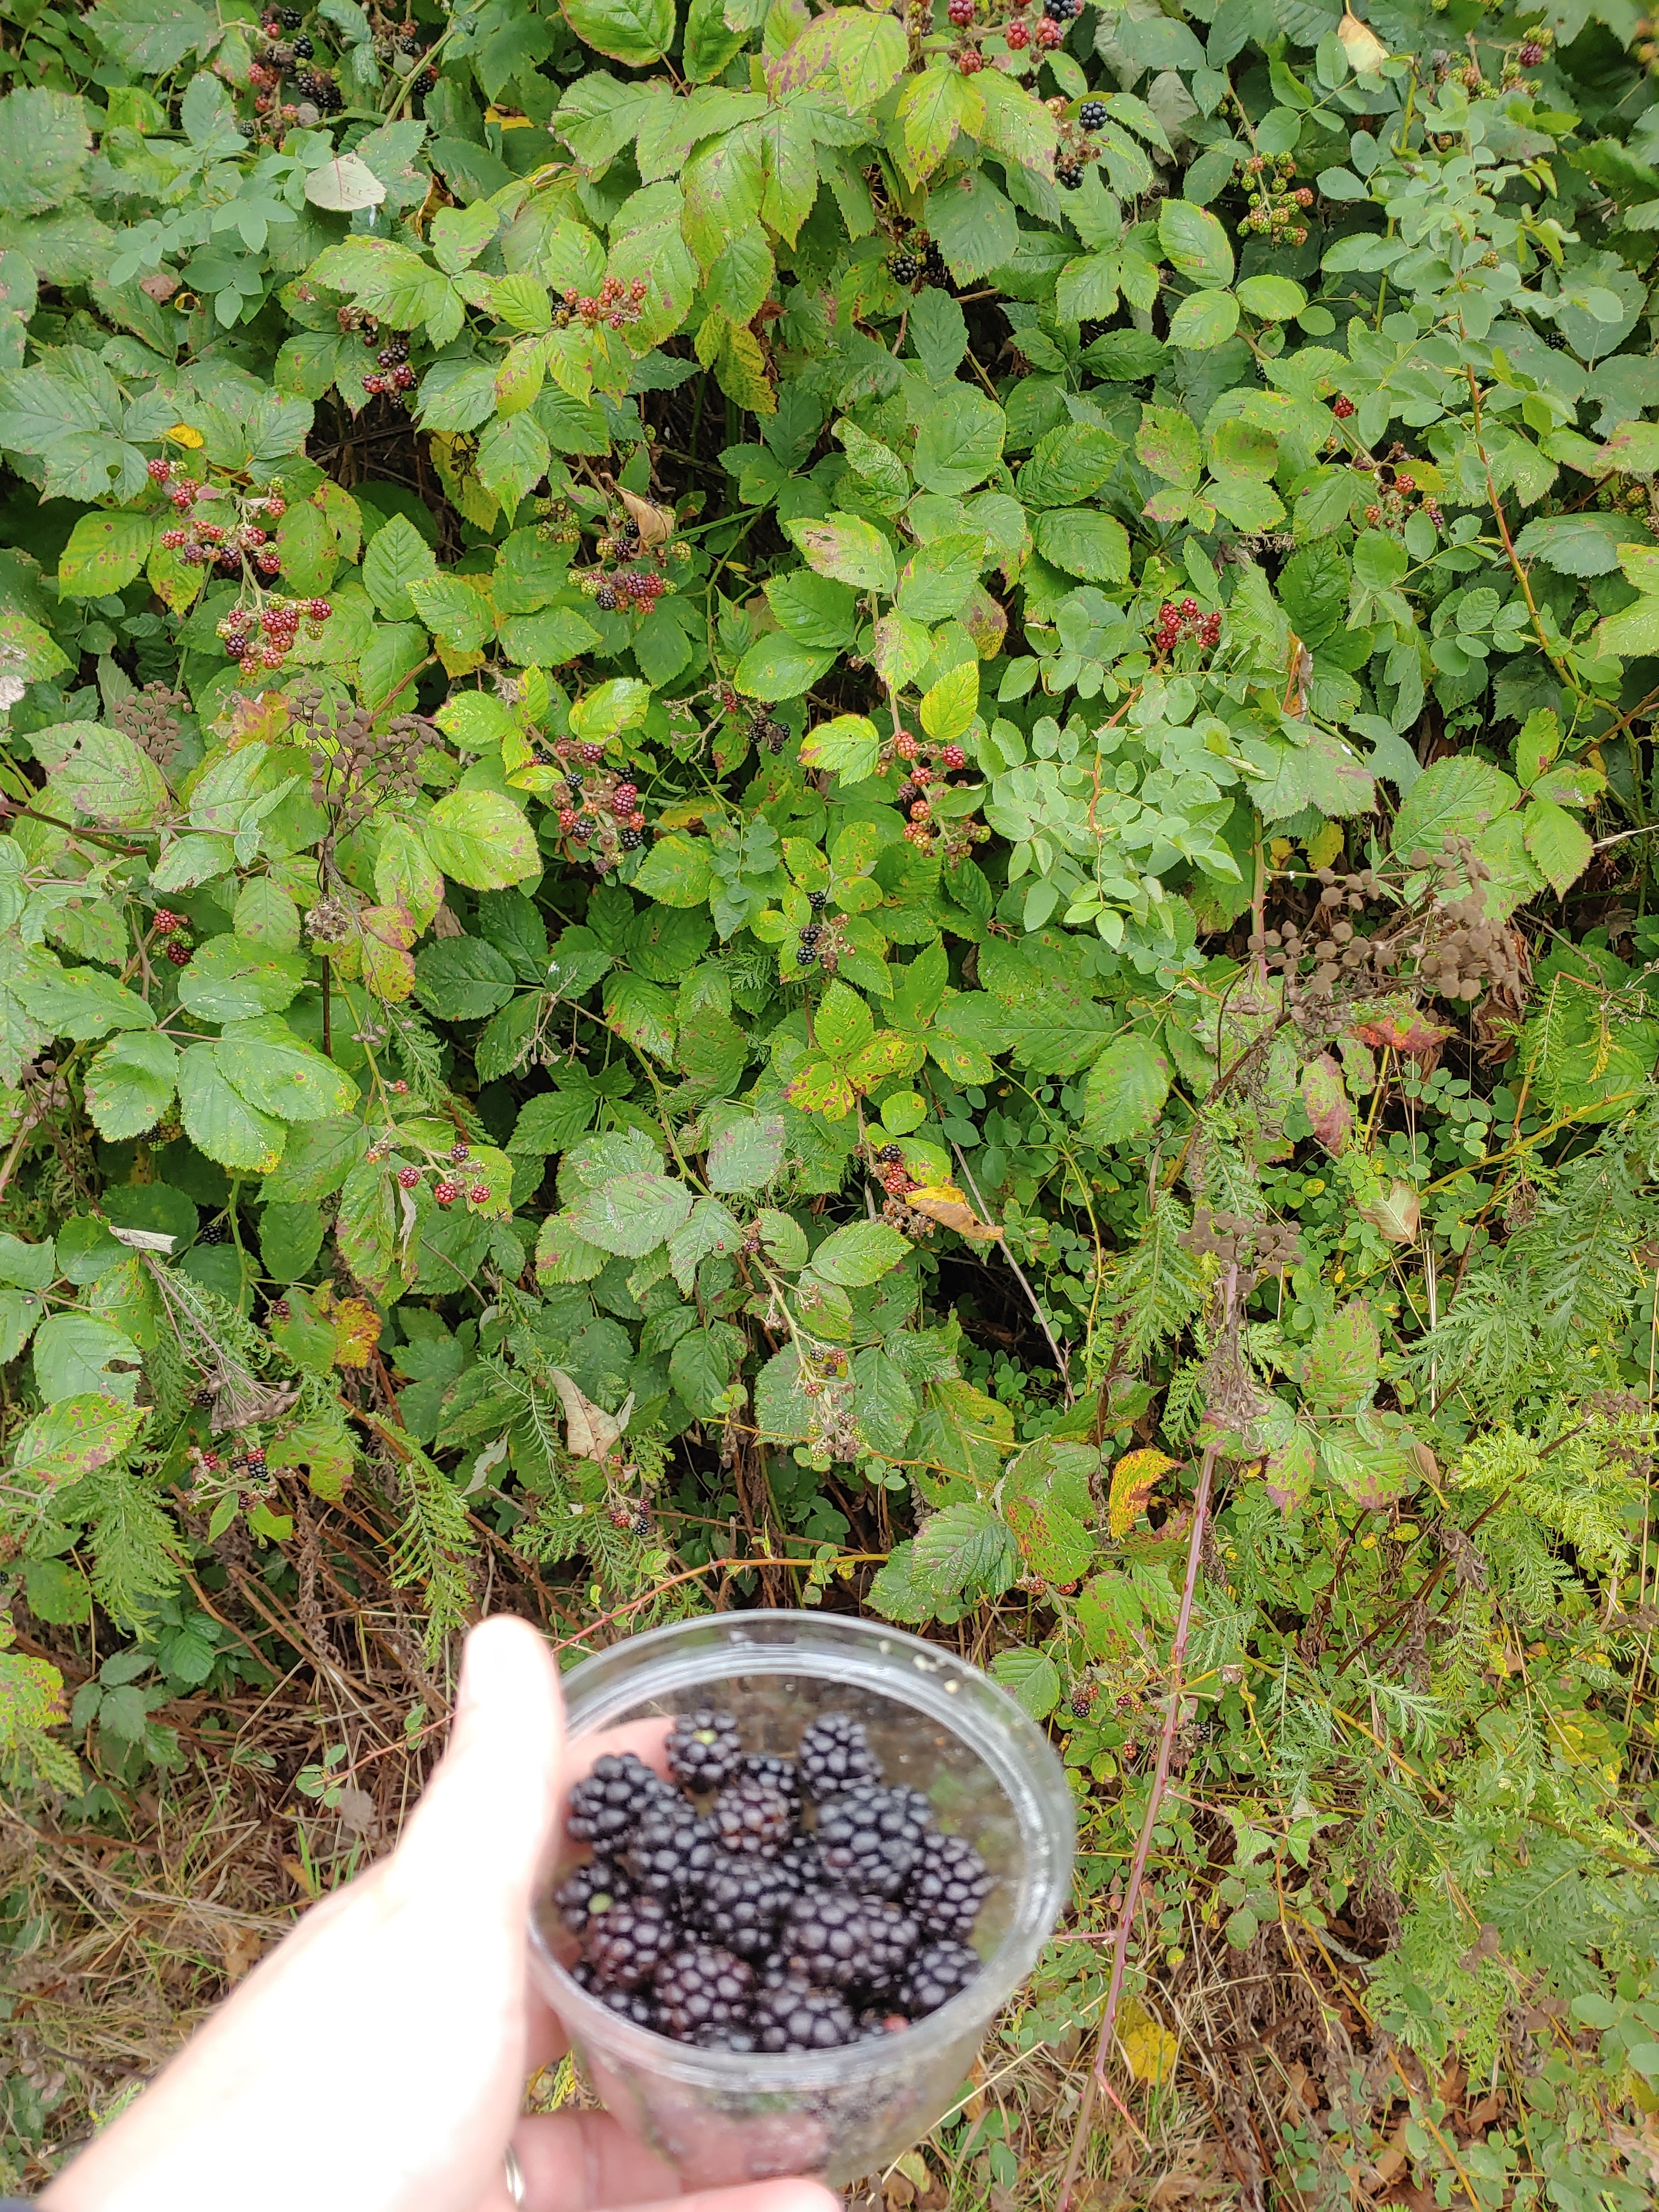 Blackberry bushes along the trail